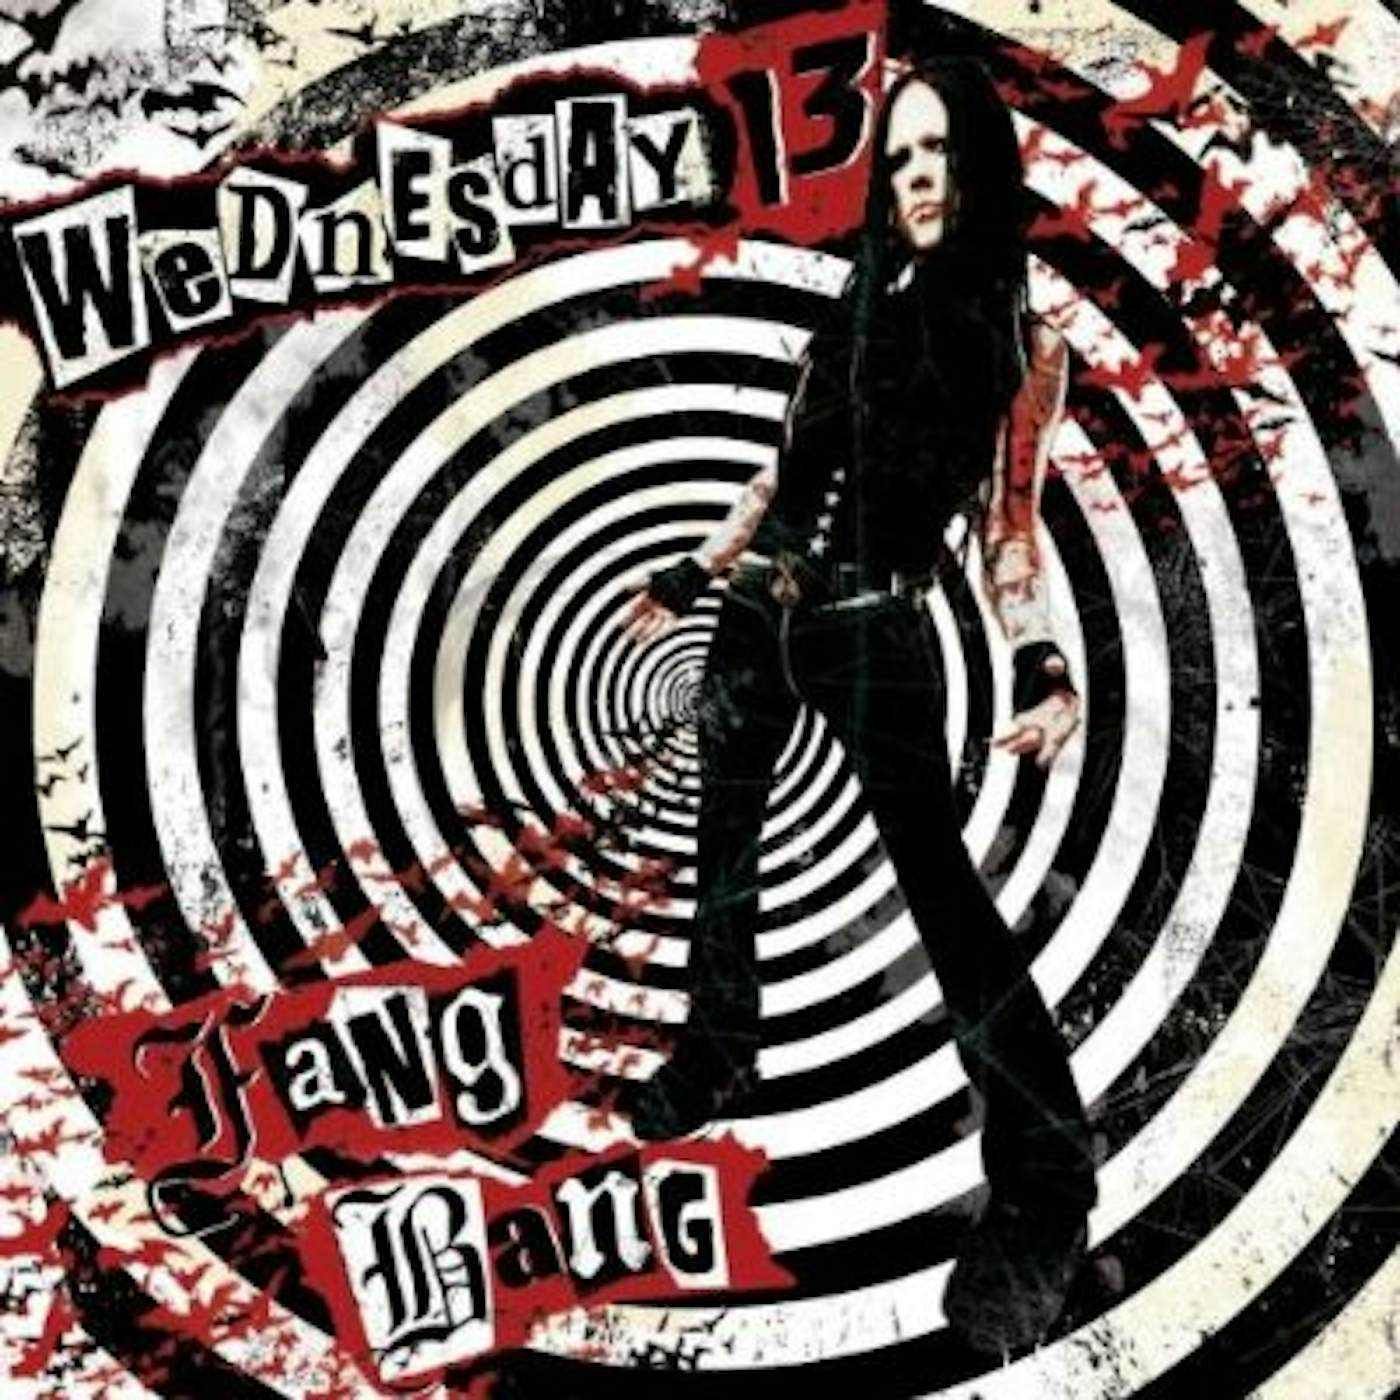 Wednesday 13 FANG BANG CD